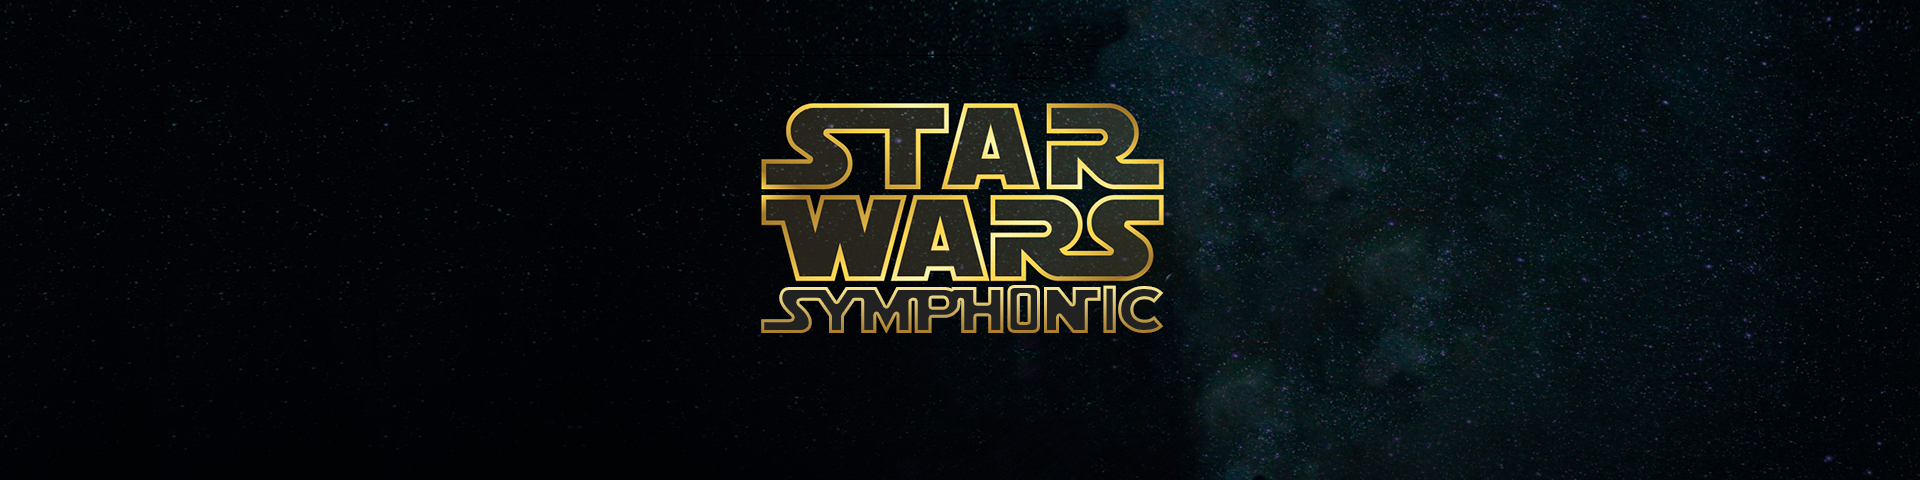 The Star Wars Symphonic